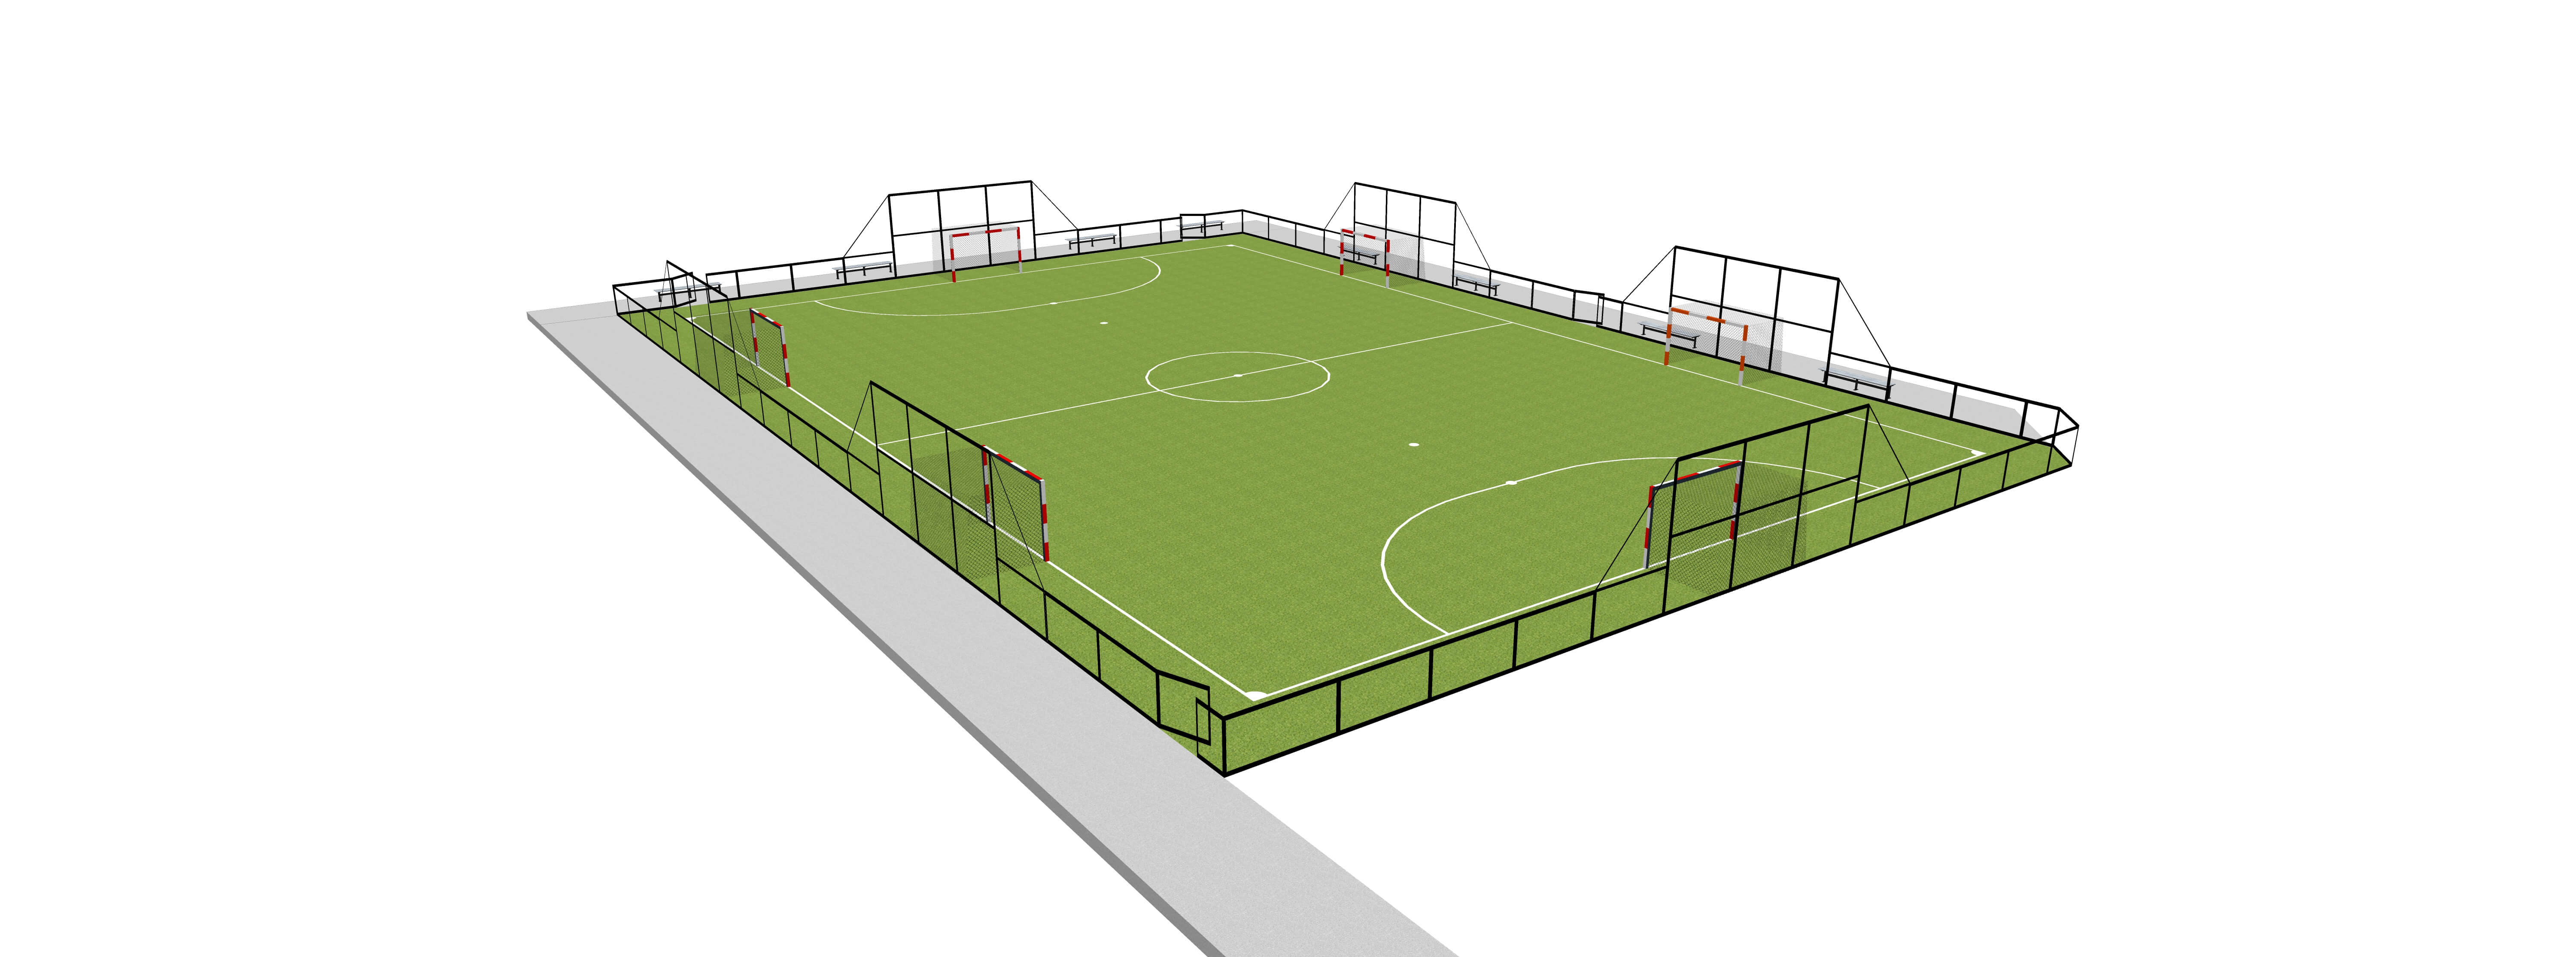 3D visualisation of a futsal Field of Play 